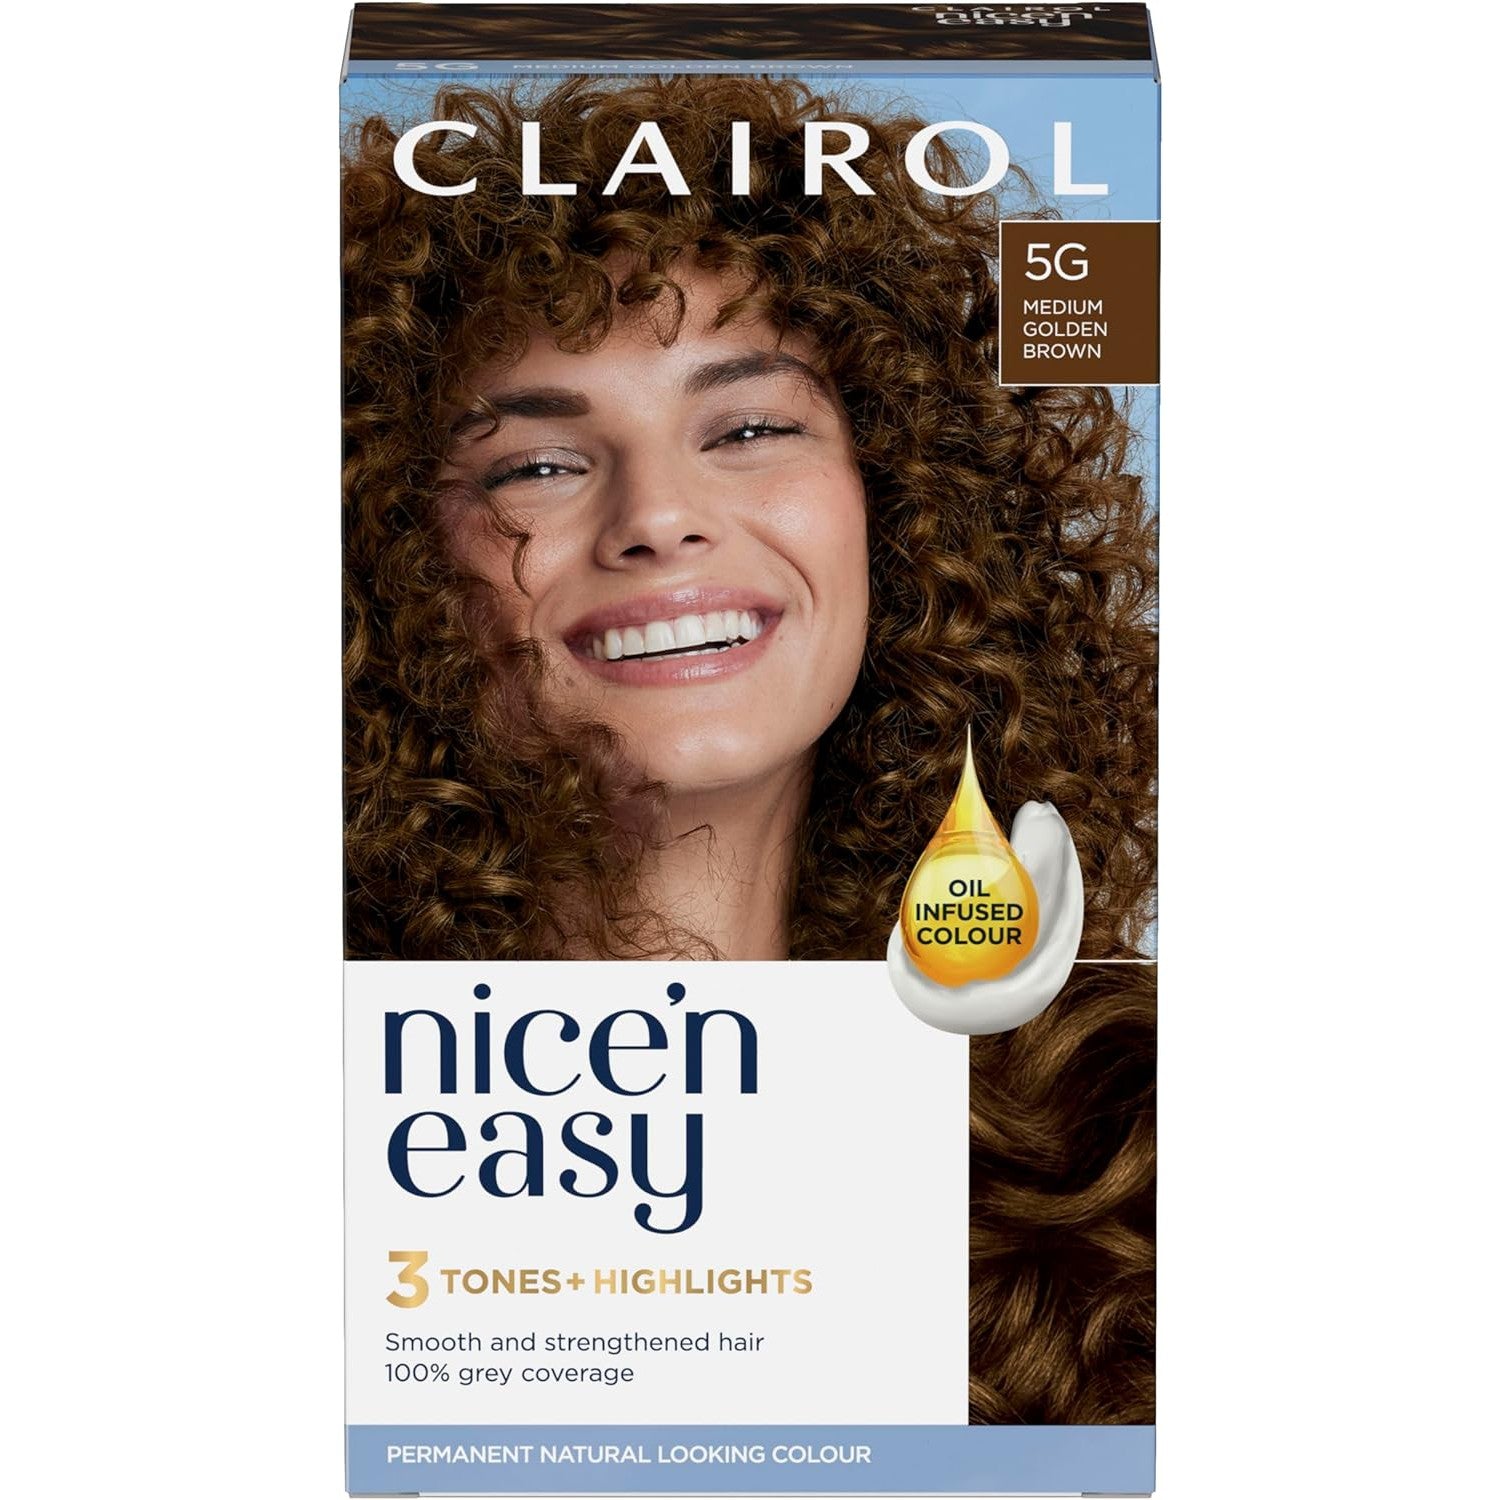 Clairol Nice'n Easy Crème, Permanent Hair Dye, 5G Medium Golden Brown